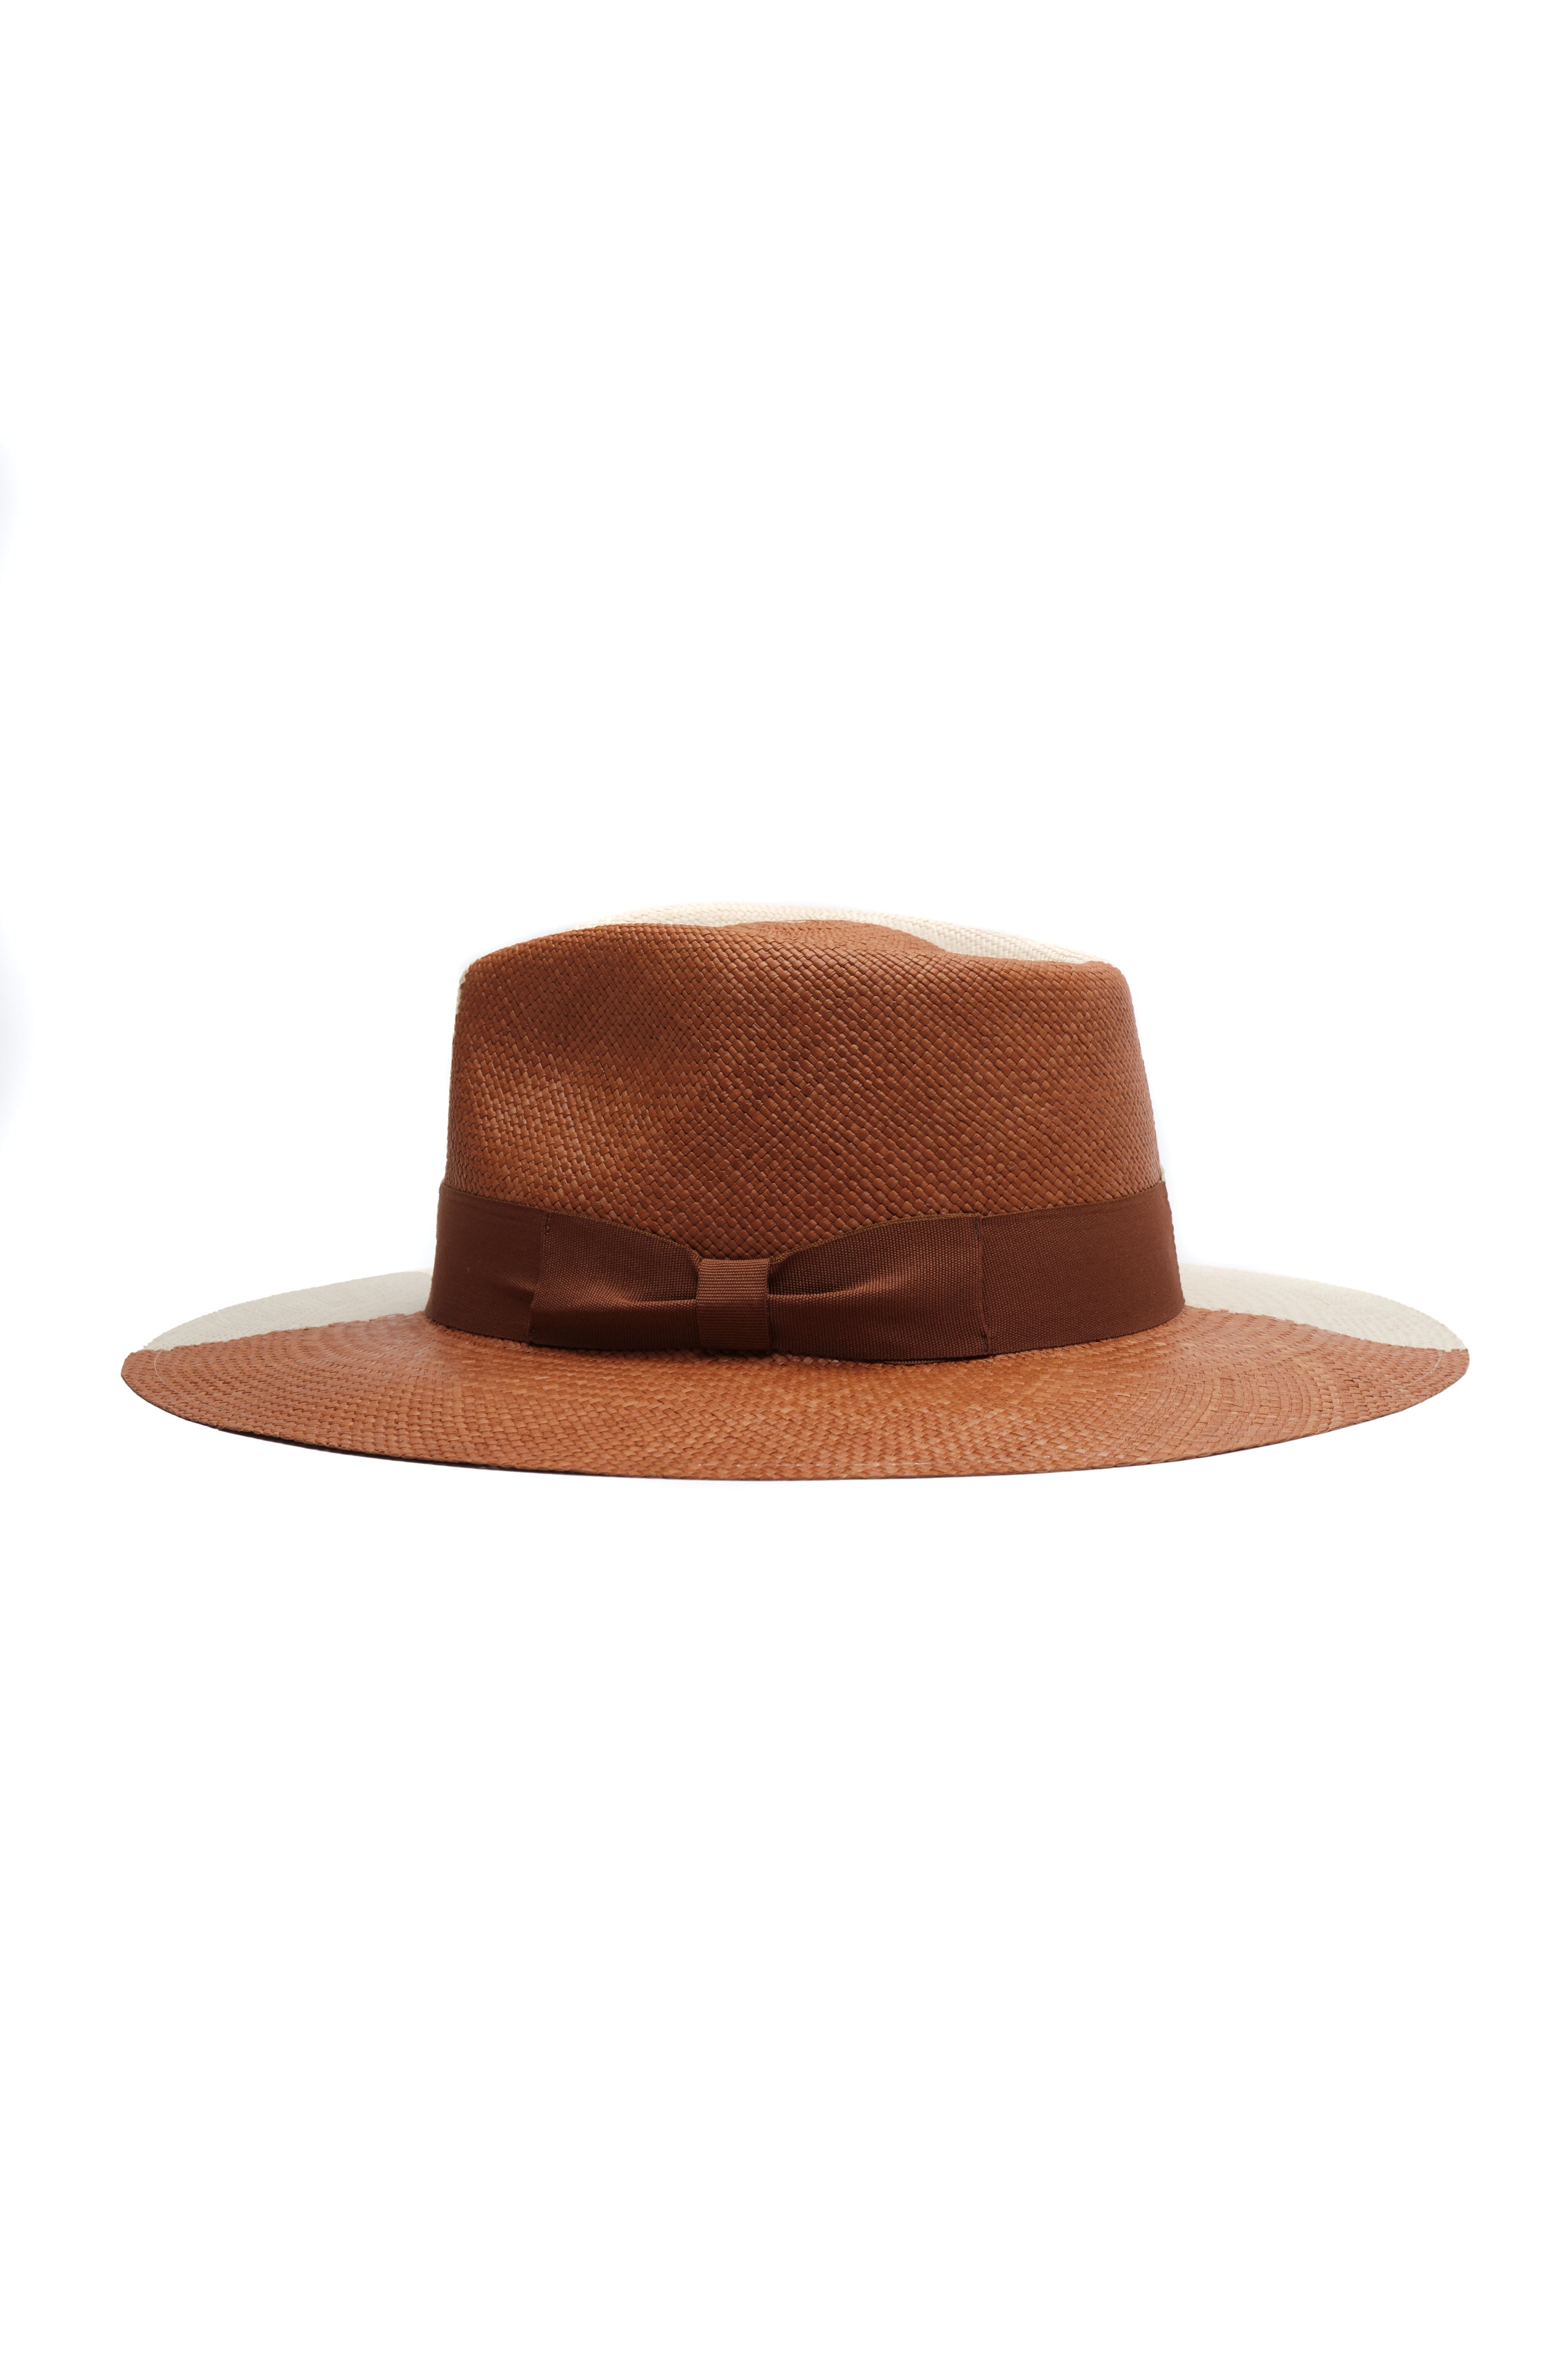 authentic panama hat